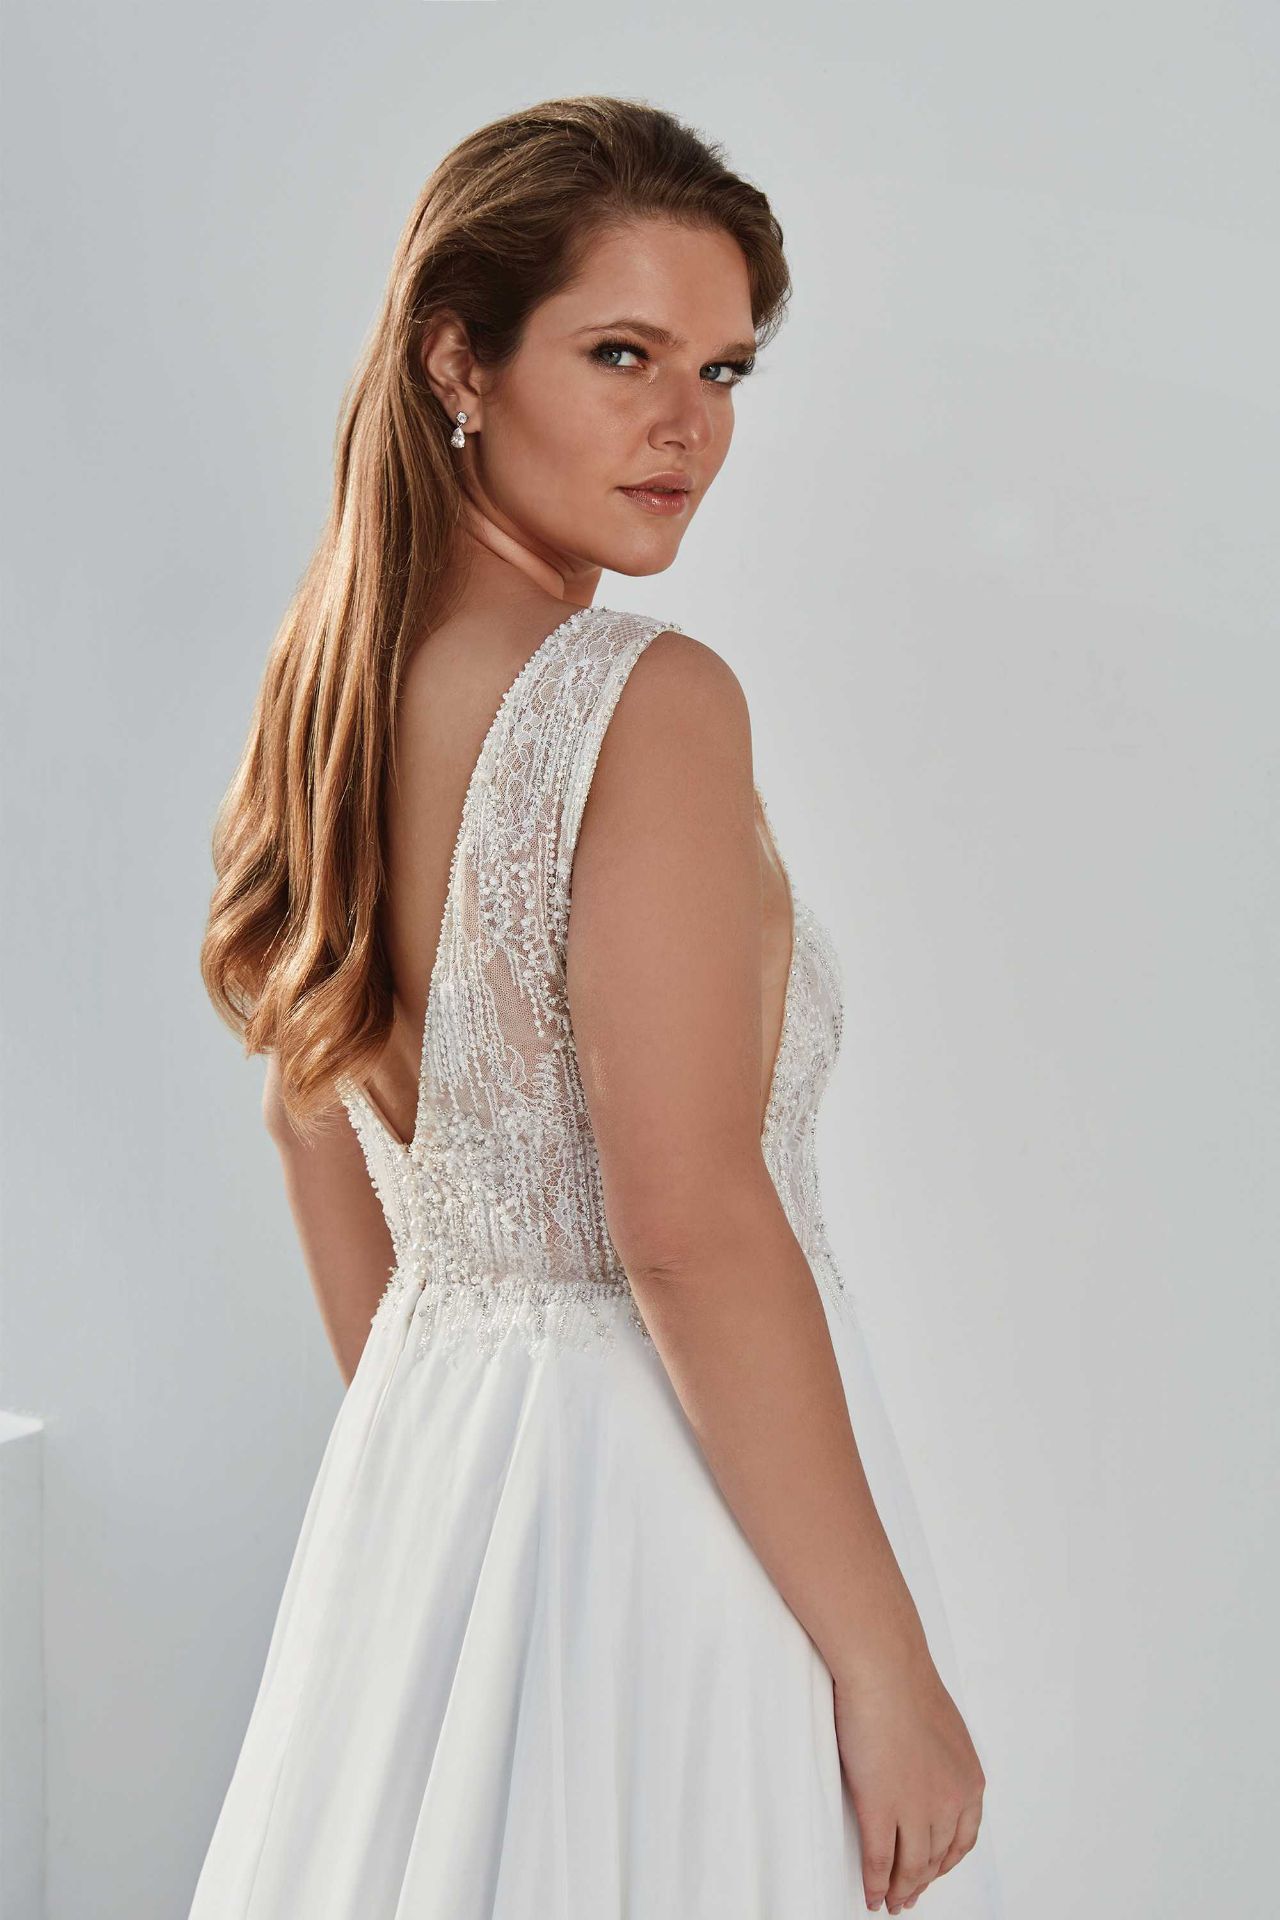 1 x Justin Alexander Designer Wedding Dress With Sheer Beaded Bodice - UK Size 10 - RRP £1,390 - Image 3 of 11